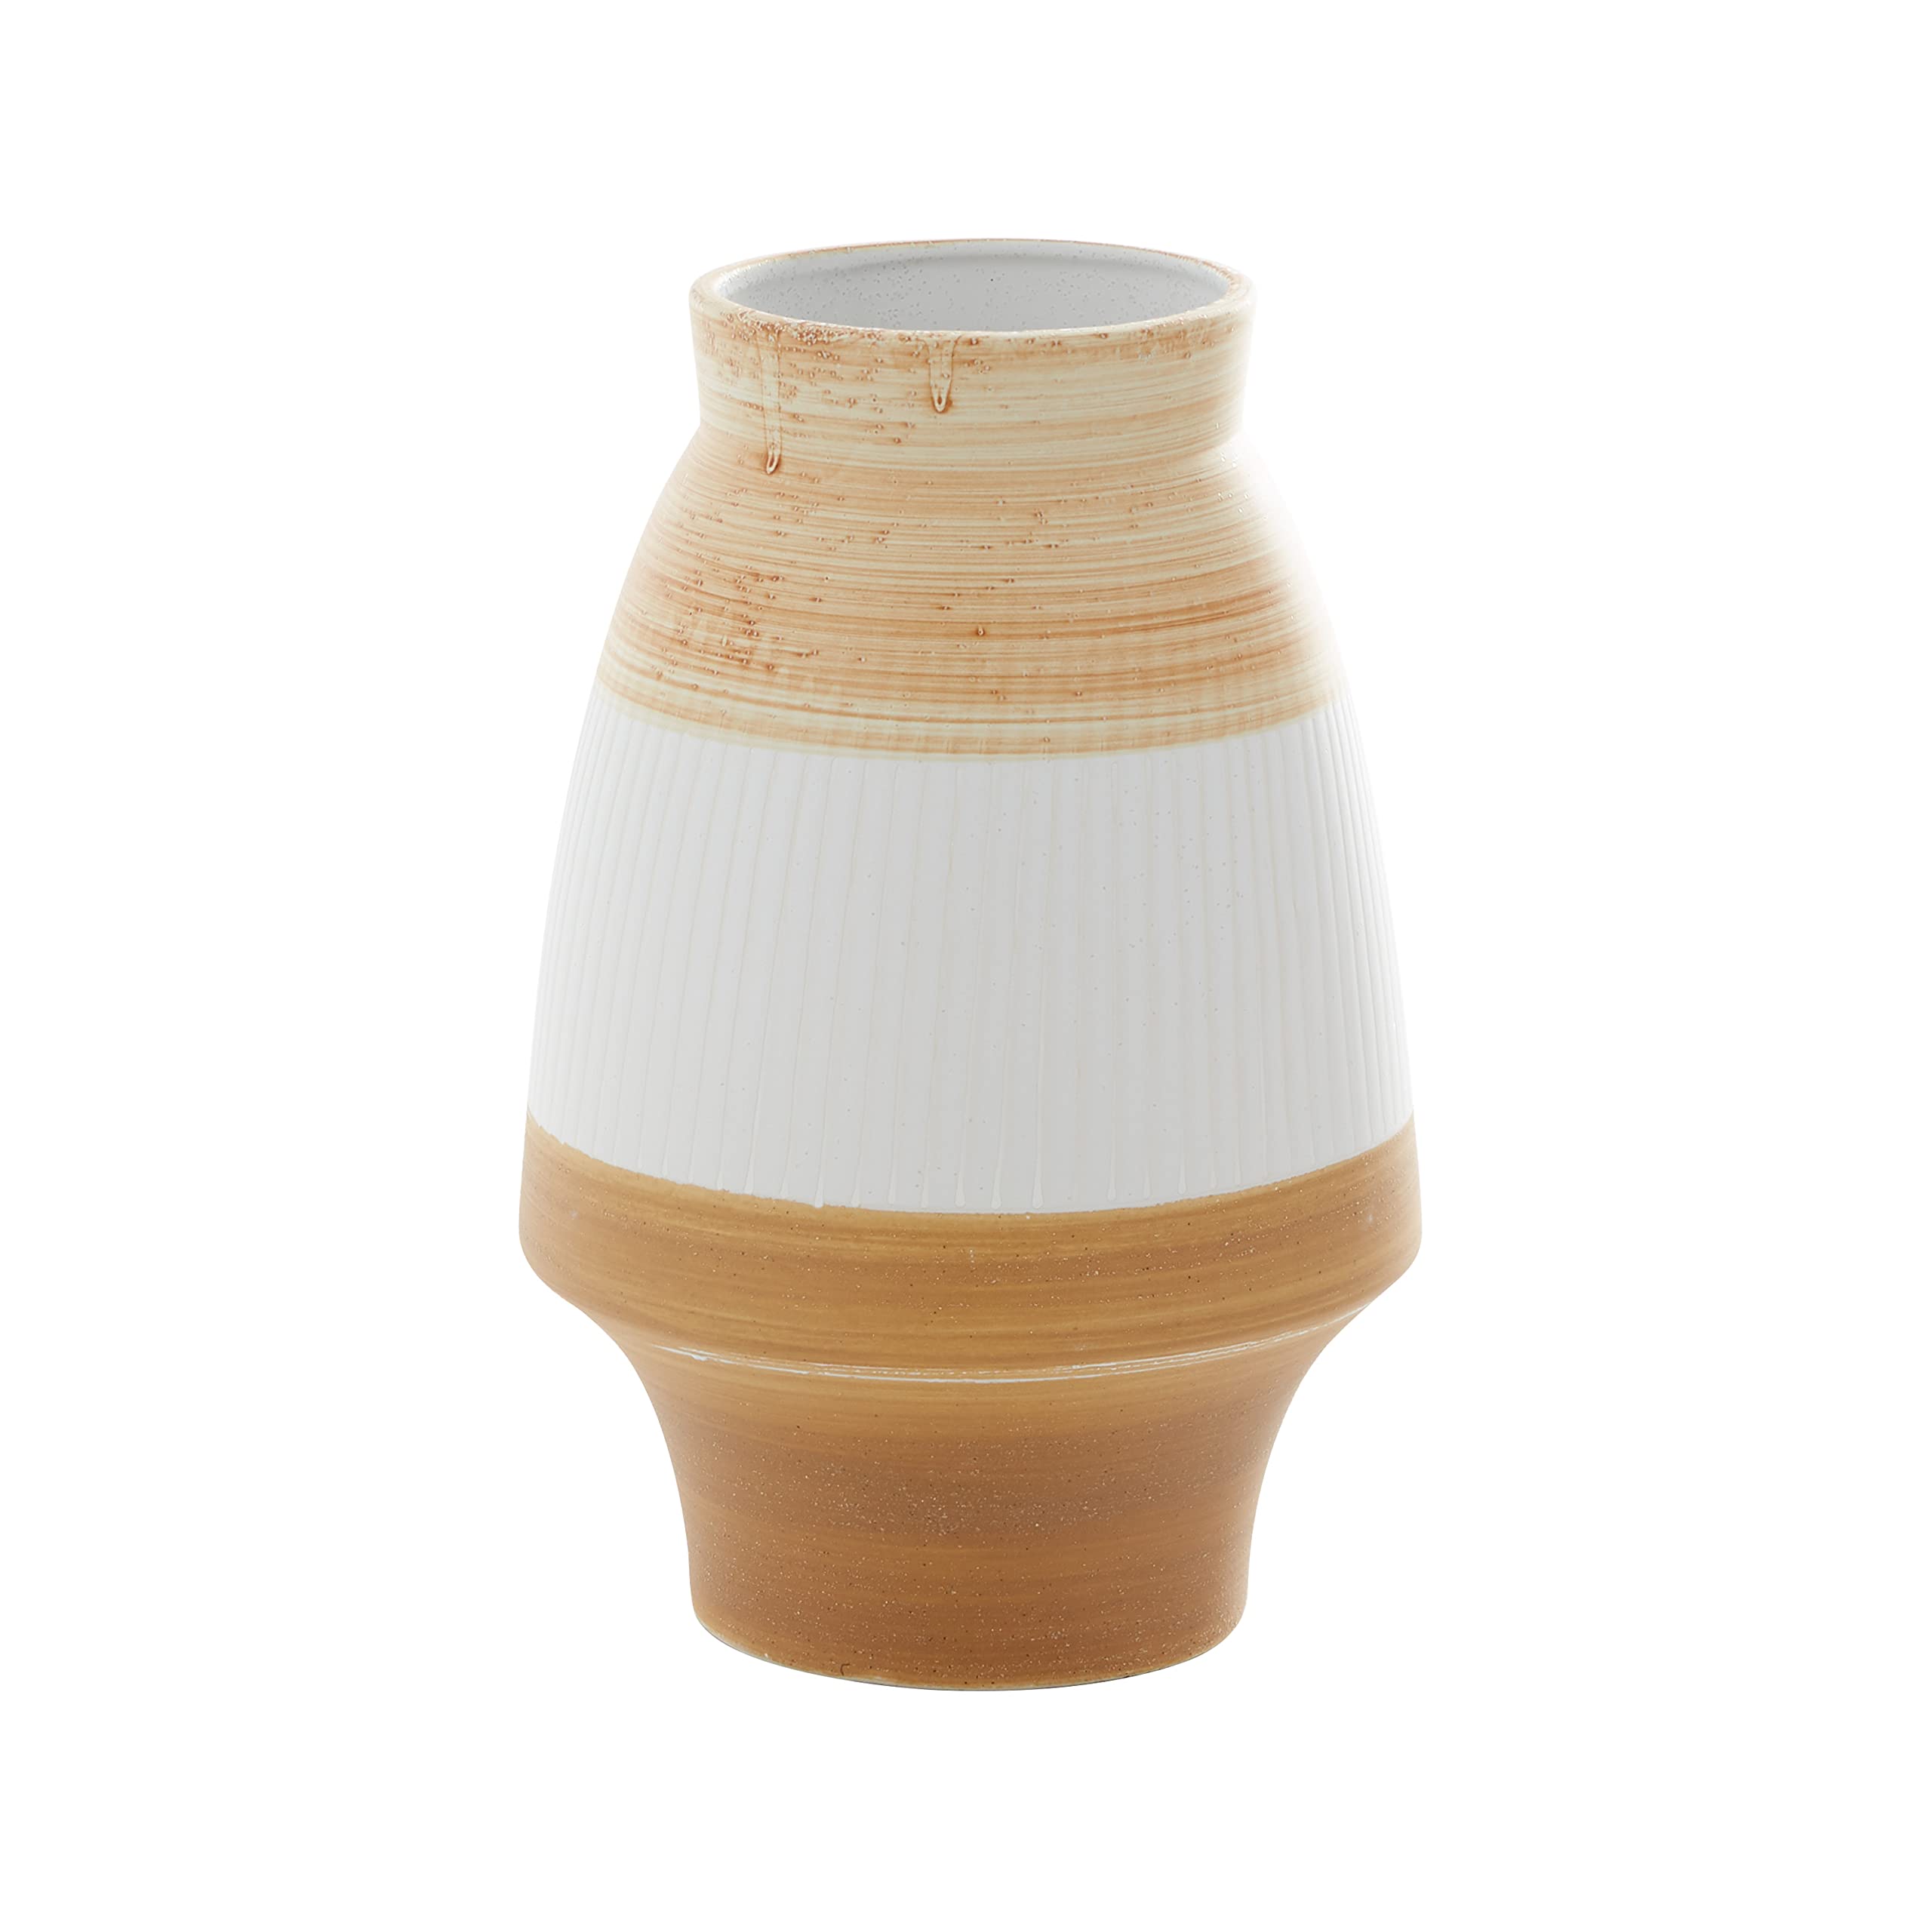 Deco 79 Ceramic Handmade Vase with Terracotta Accents, 9